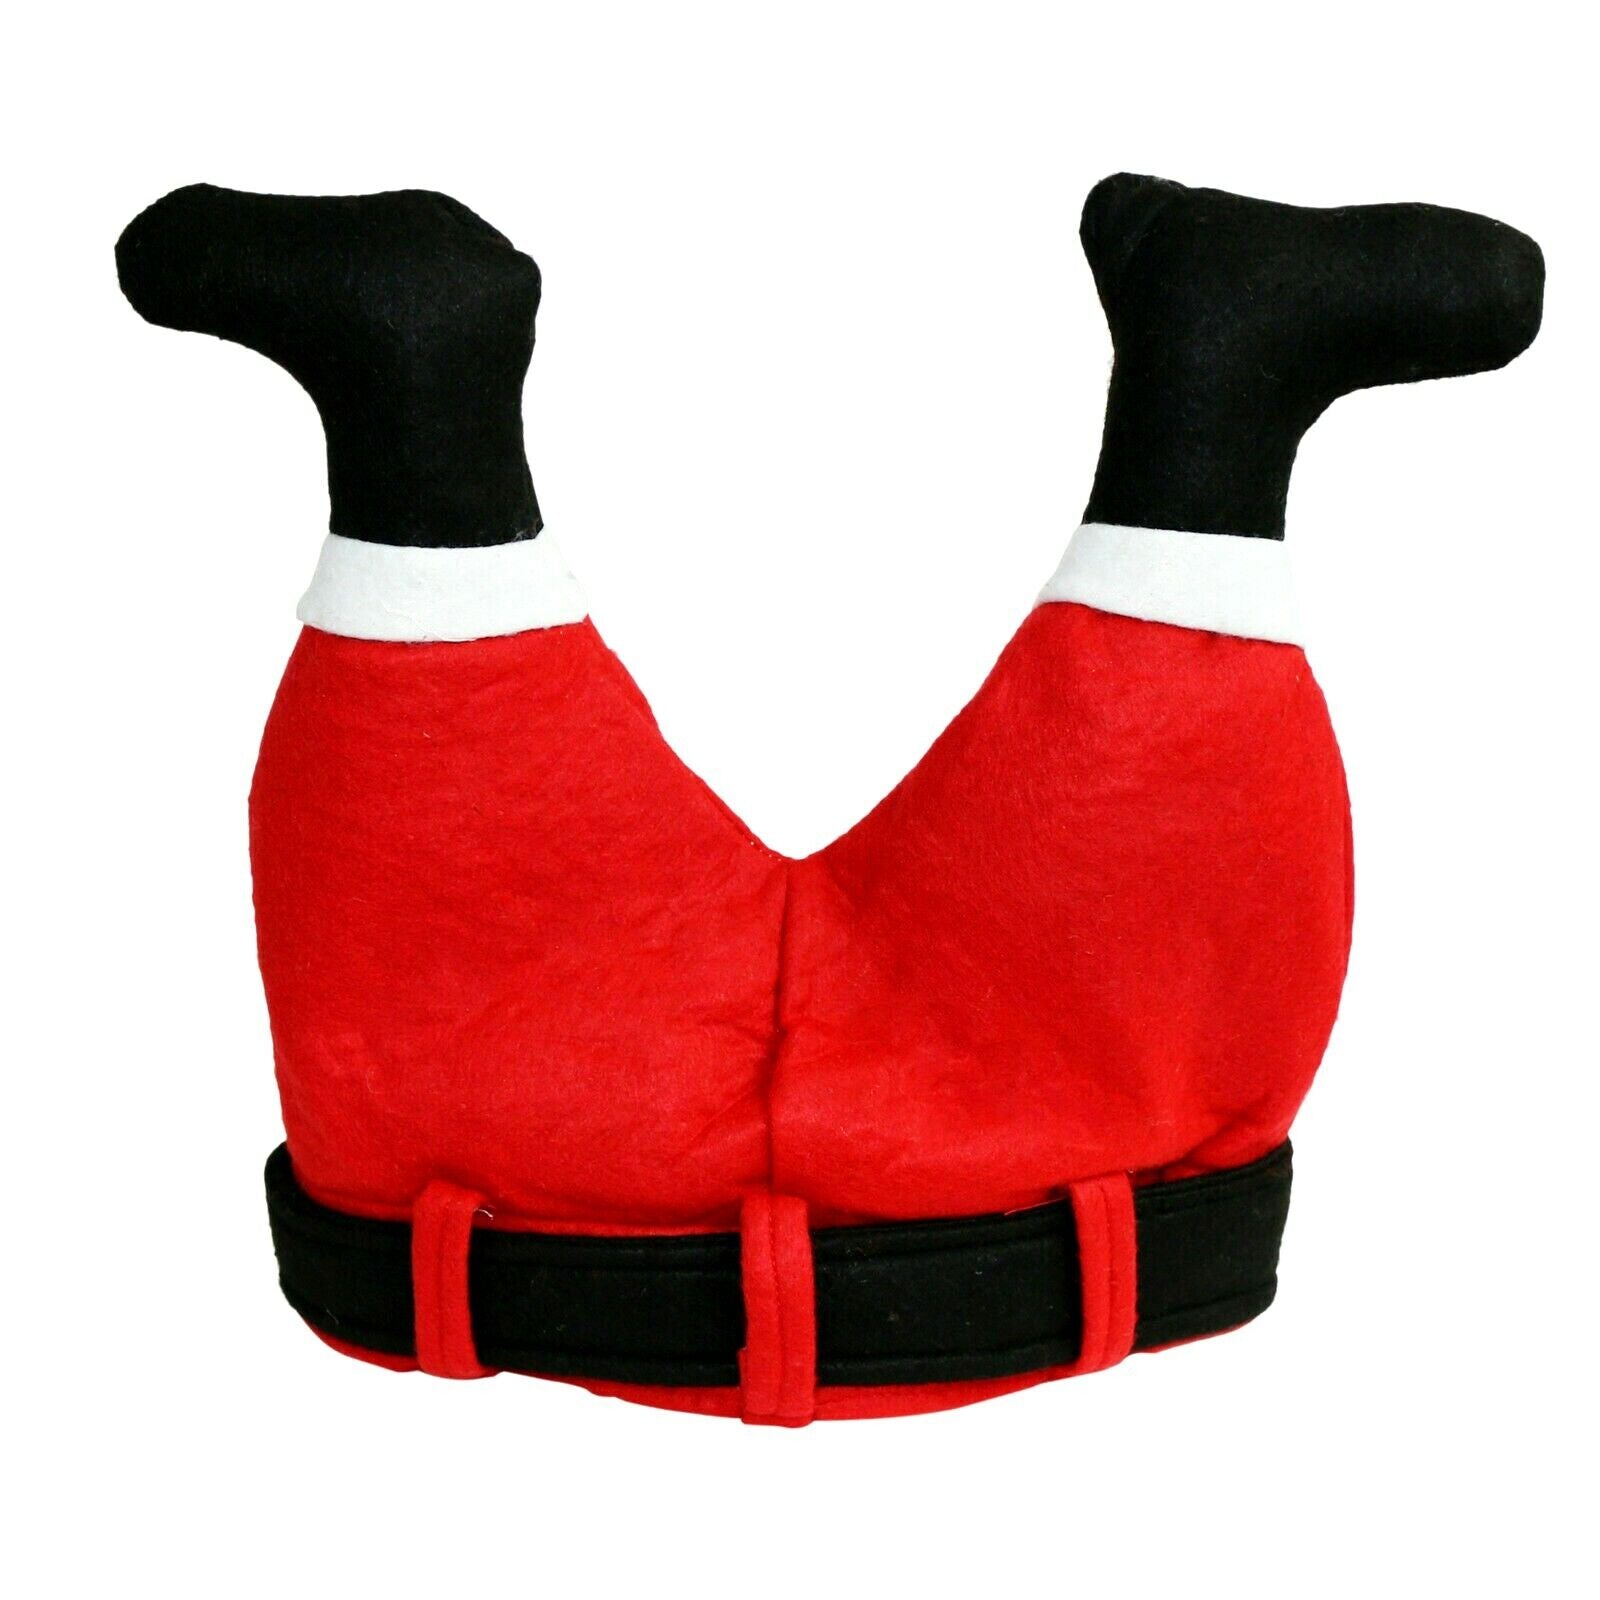 Beclen Harp Novelty Christmas Plush Red Santa Claus Legs Hat Clown Pants Legs Xmas Gift